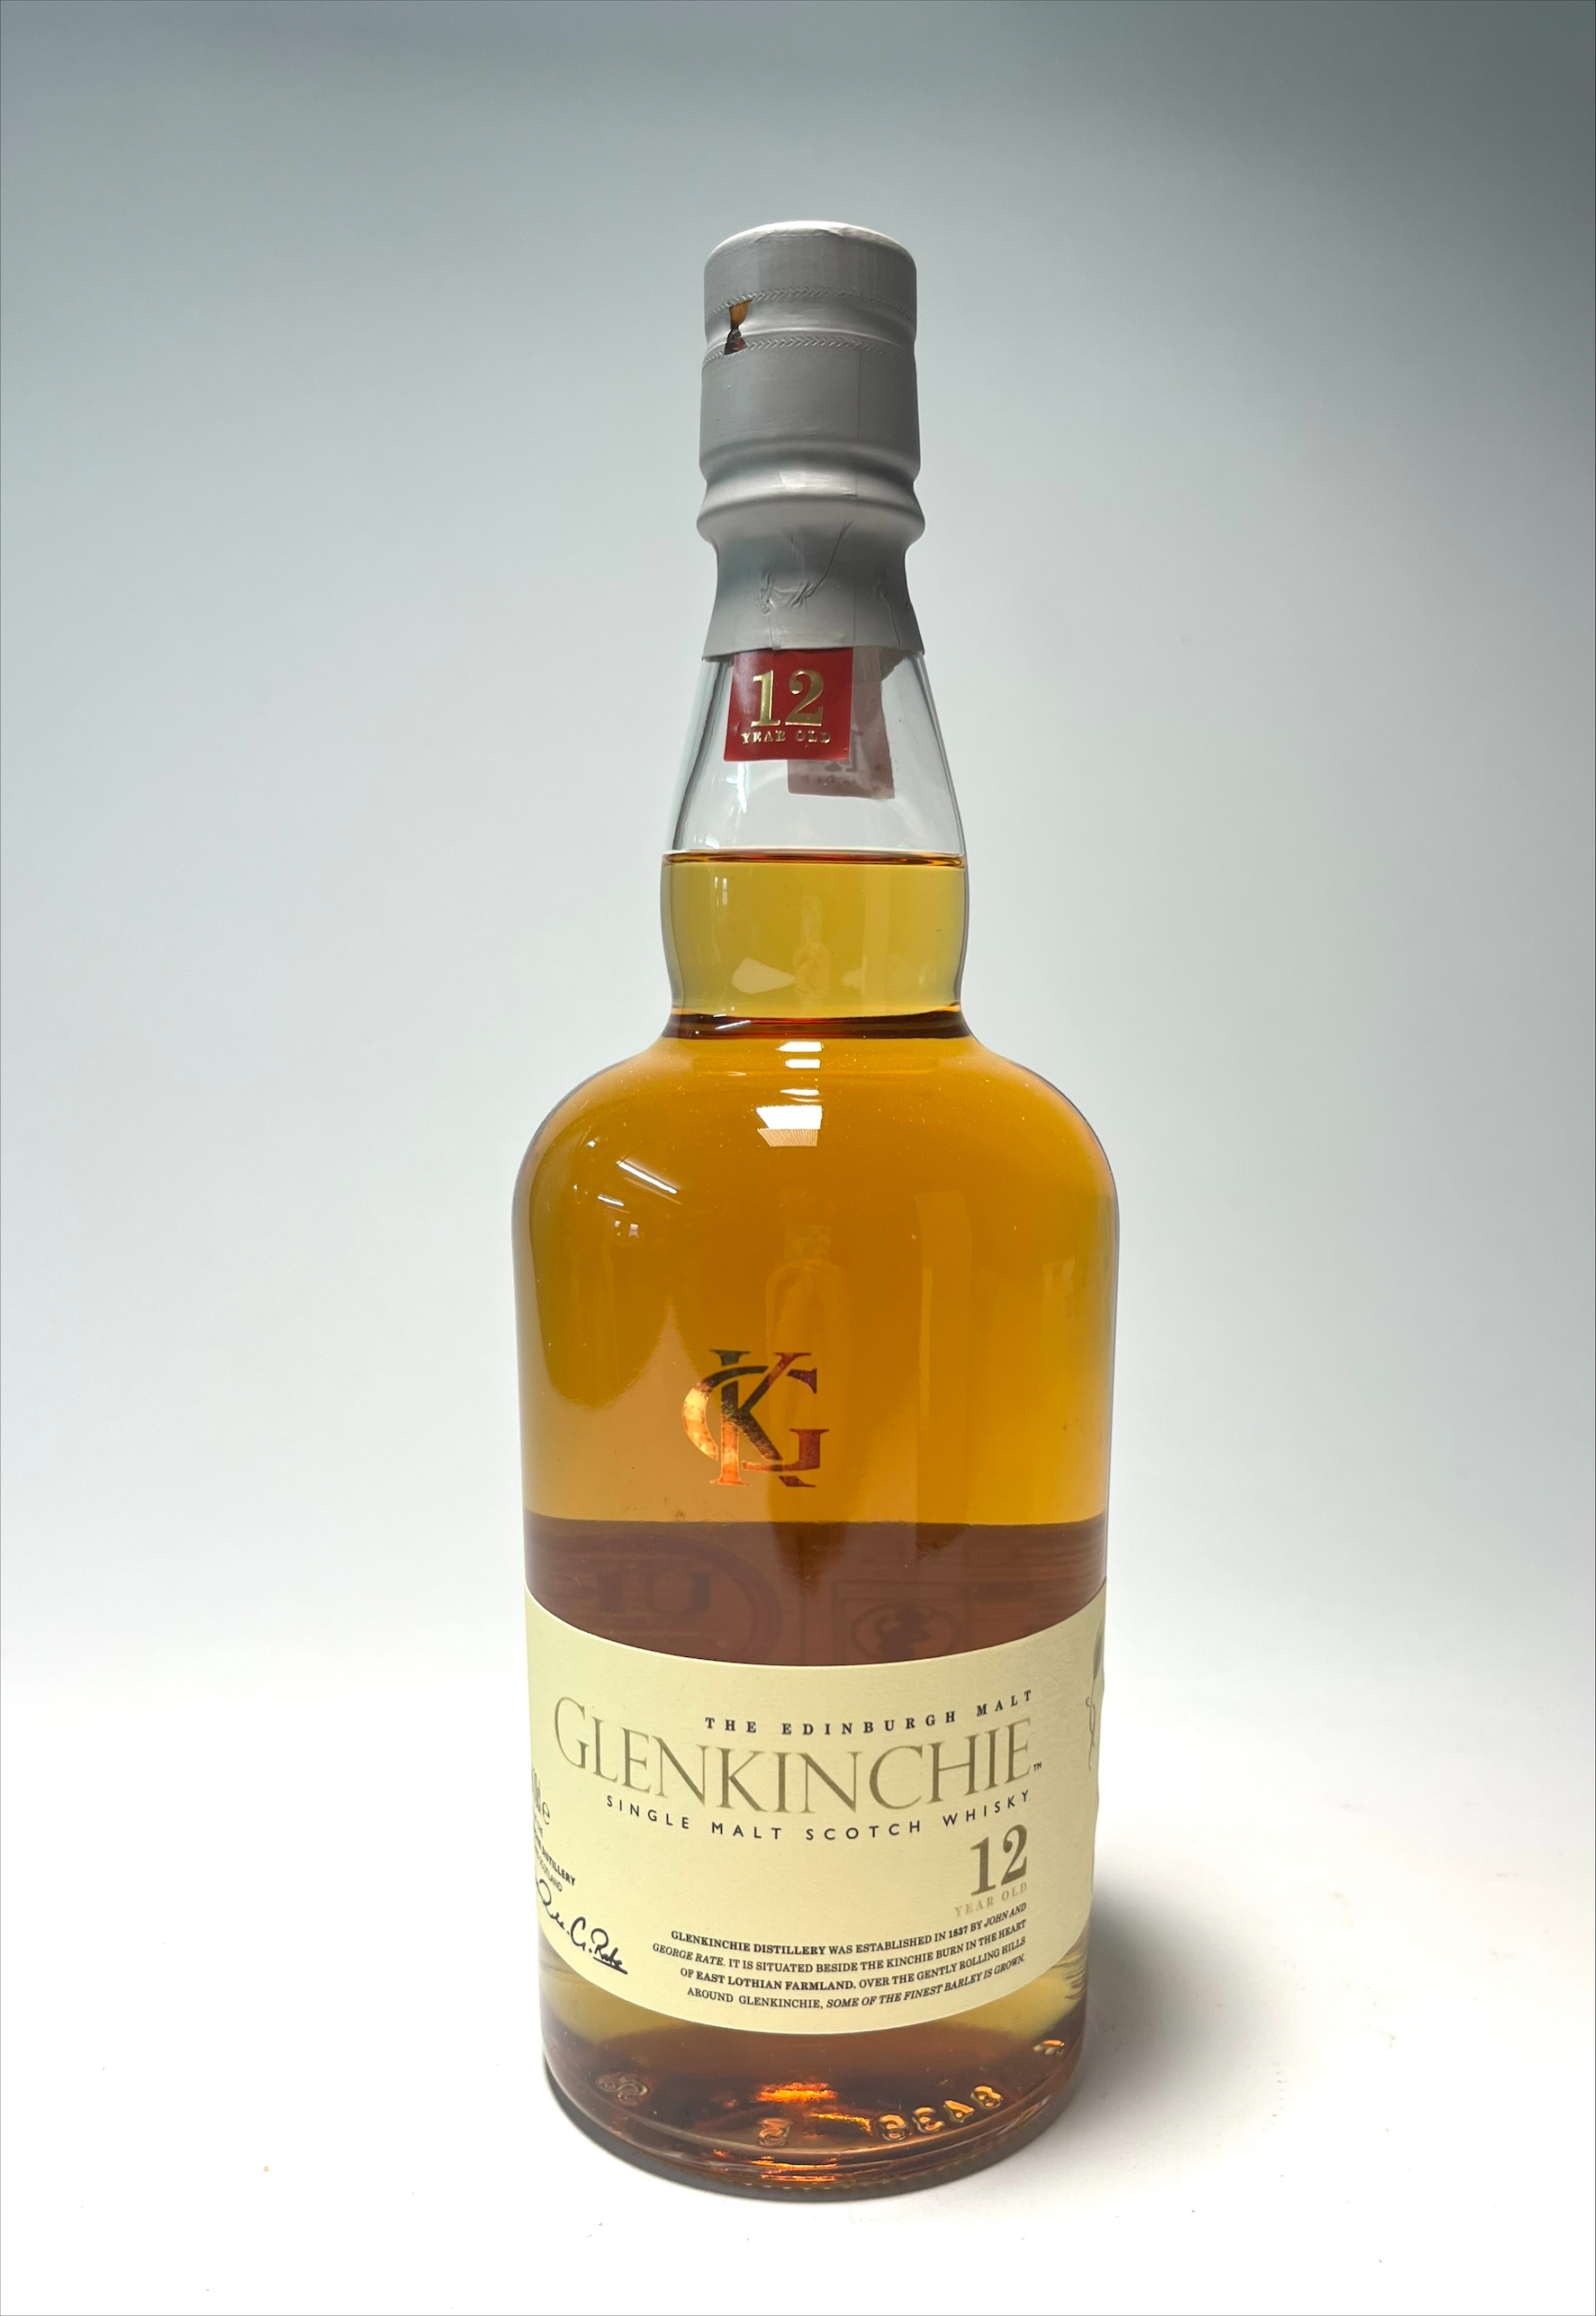 A bottle of The Edinburgh Malt Glenkinchie Single Malt Scotch Whisky, aged 12 years, distilled at - Image 2 of 2